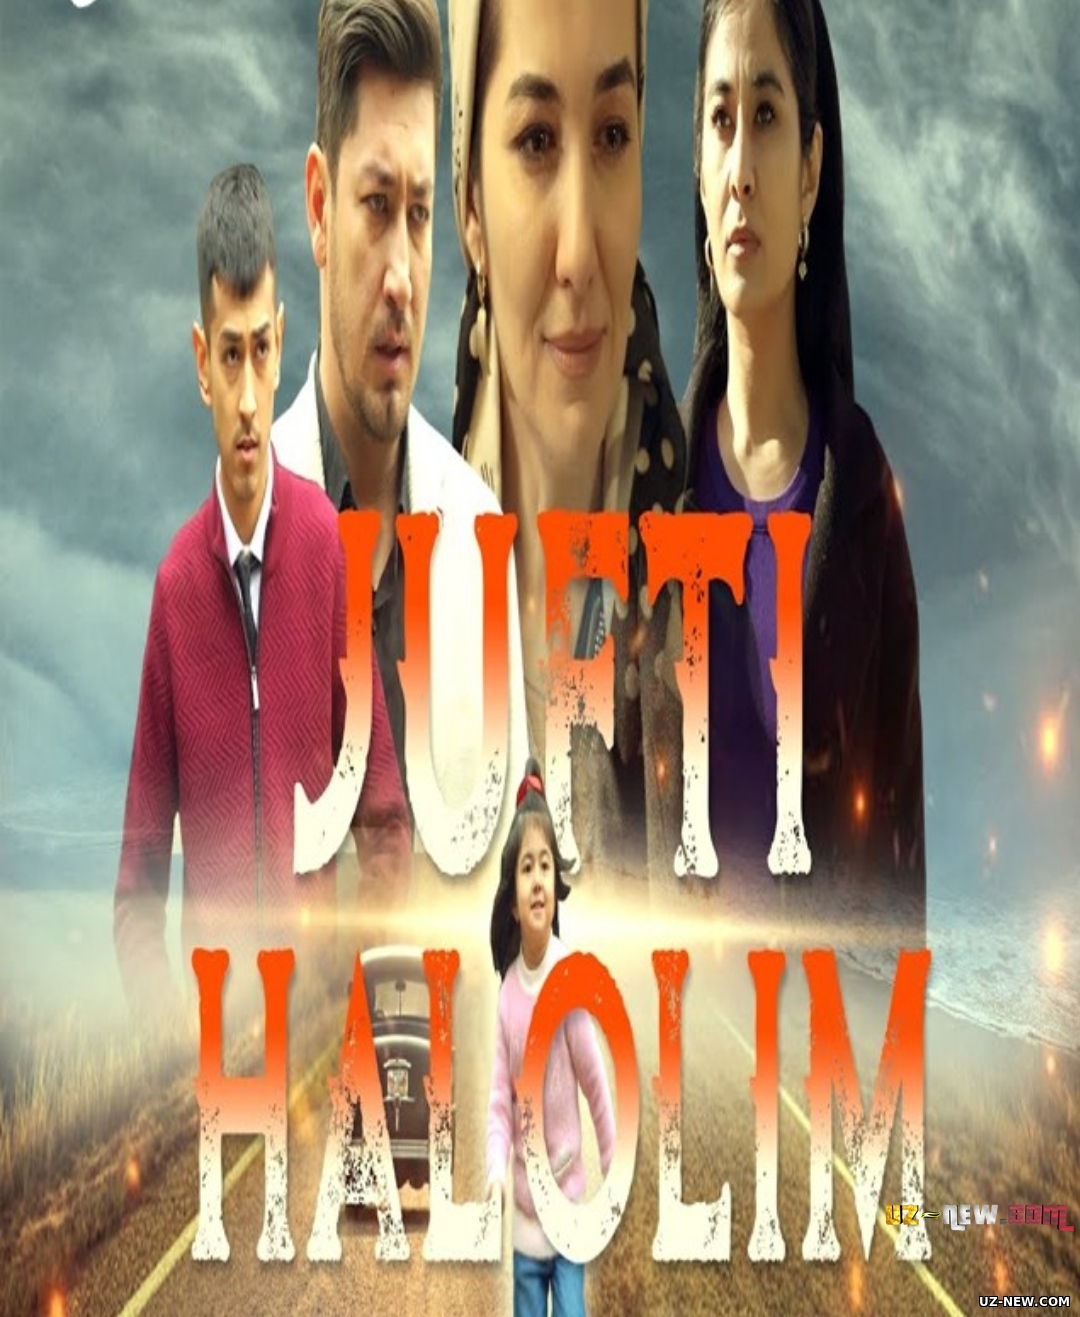 Jufti halolim (o'zbek kino) | Жуфти xалолим (ўзбек кино)| 2022